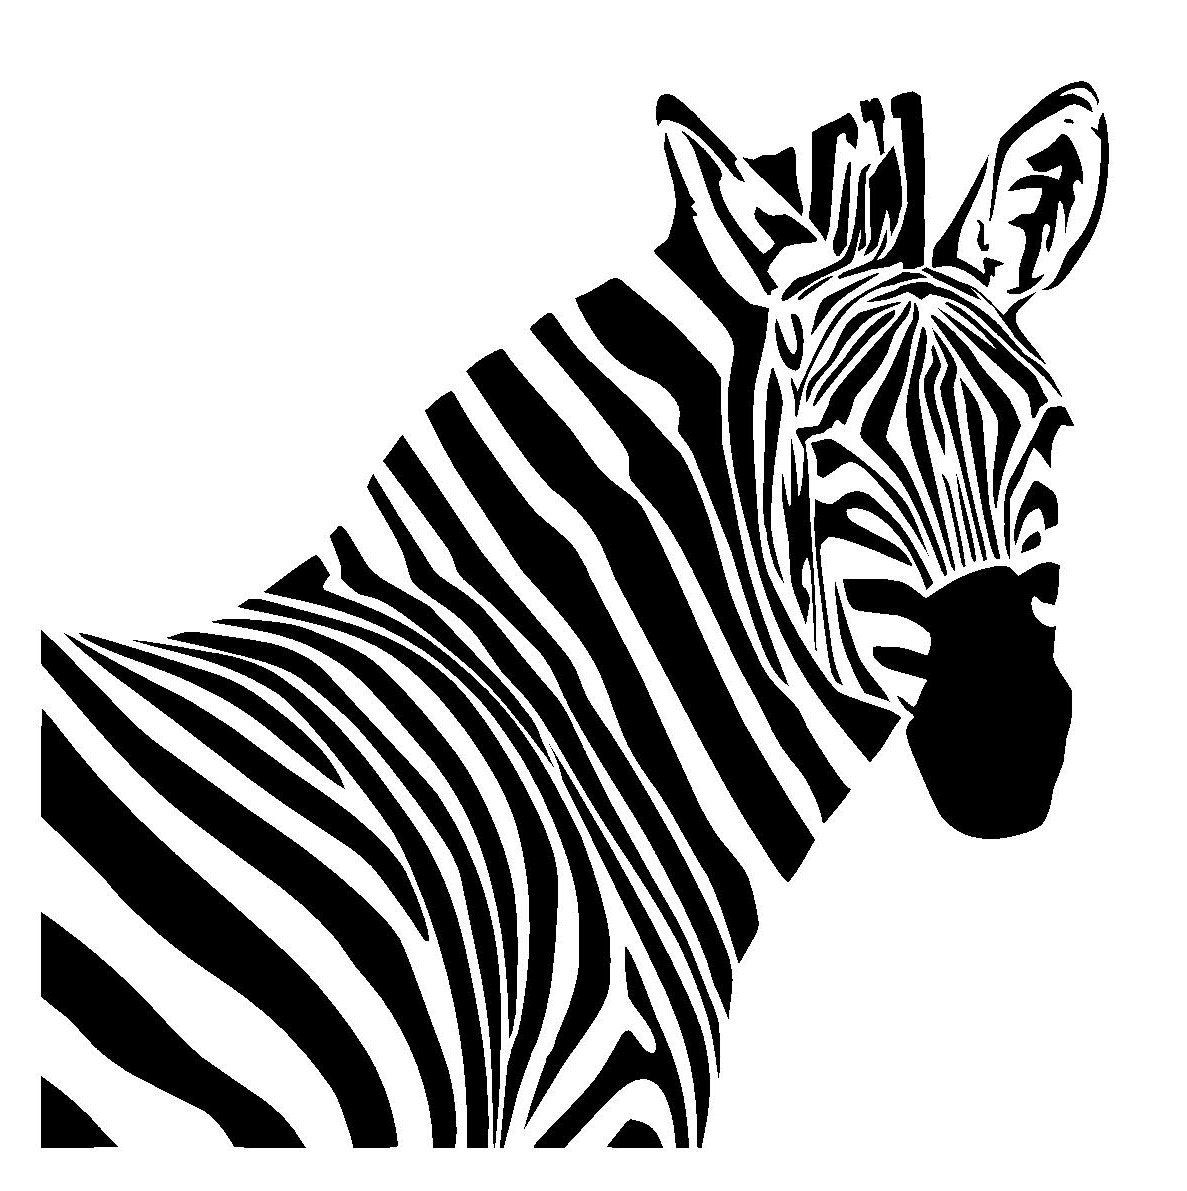 6/6 zebra stencil 1.